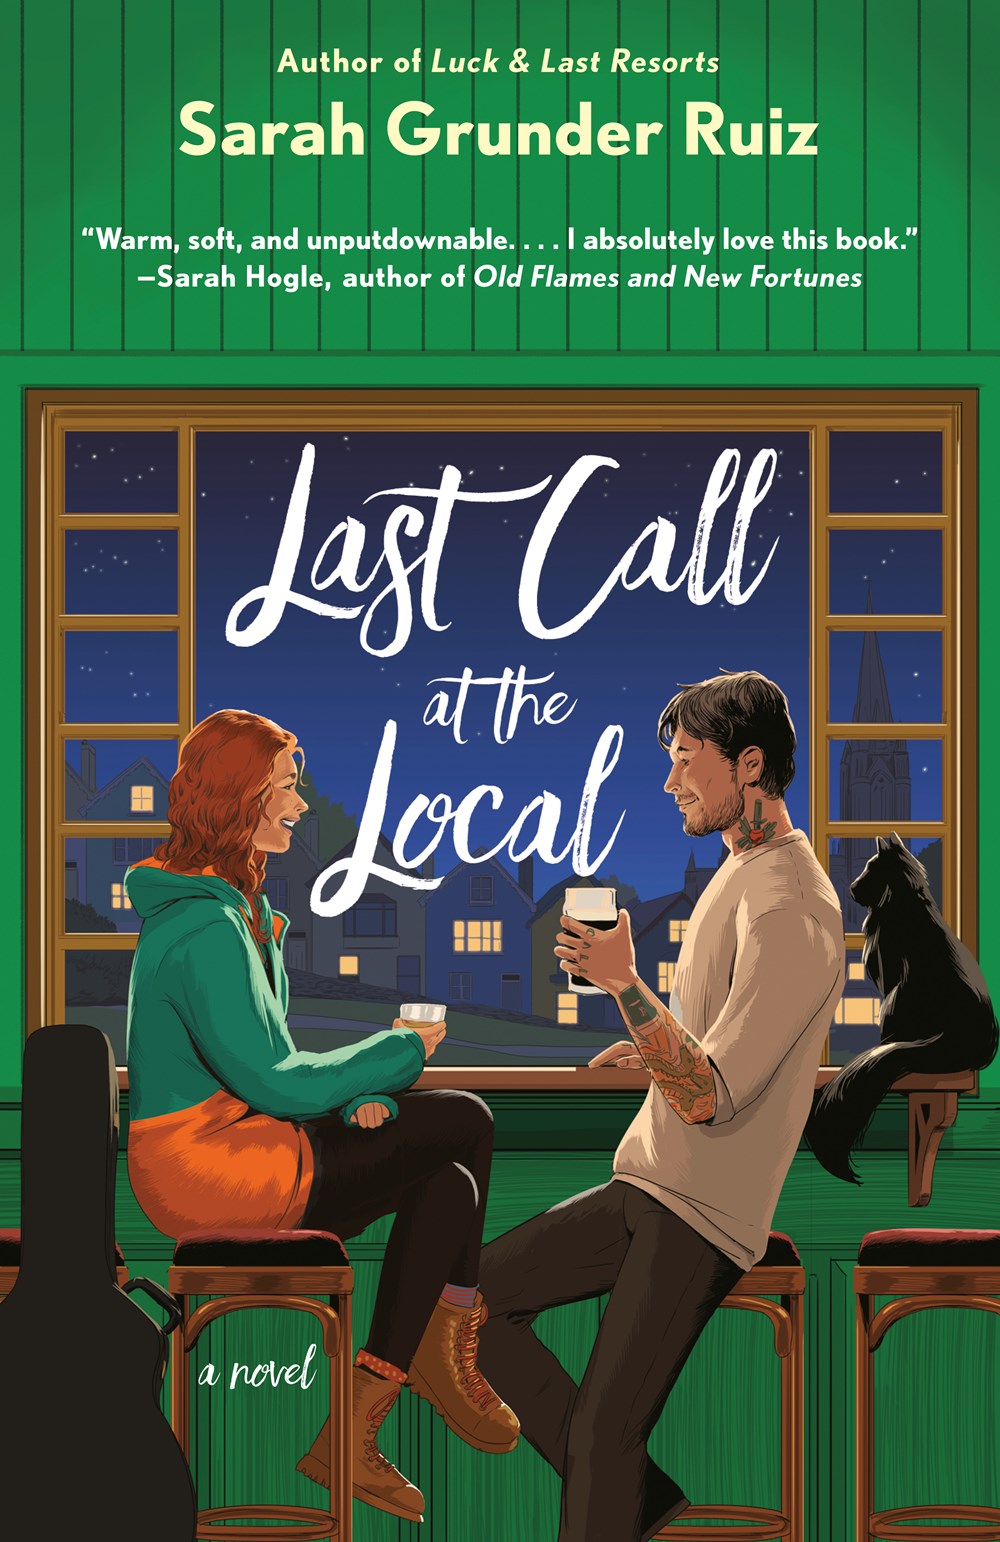 Last Call at the Local by Sarah Grunder Ruiz